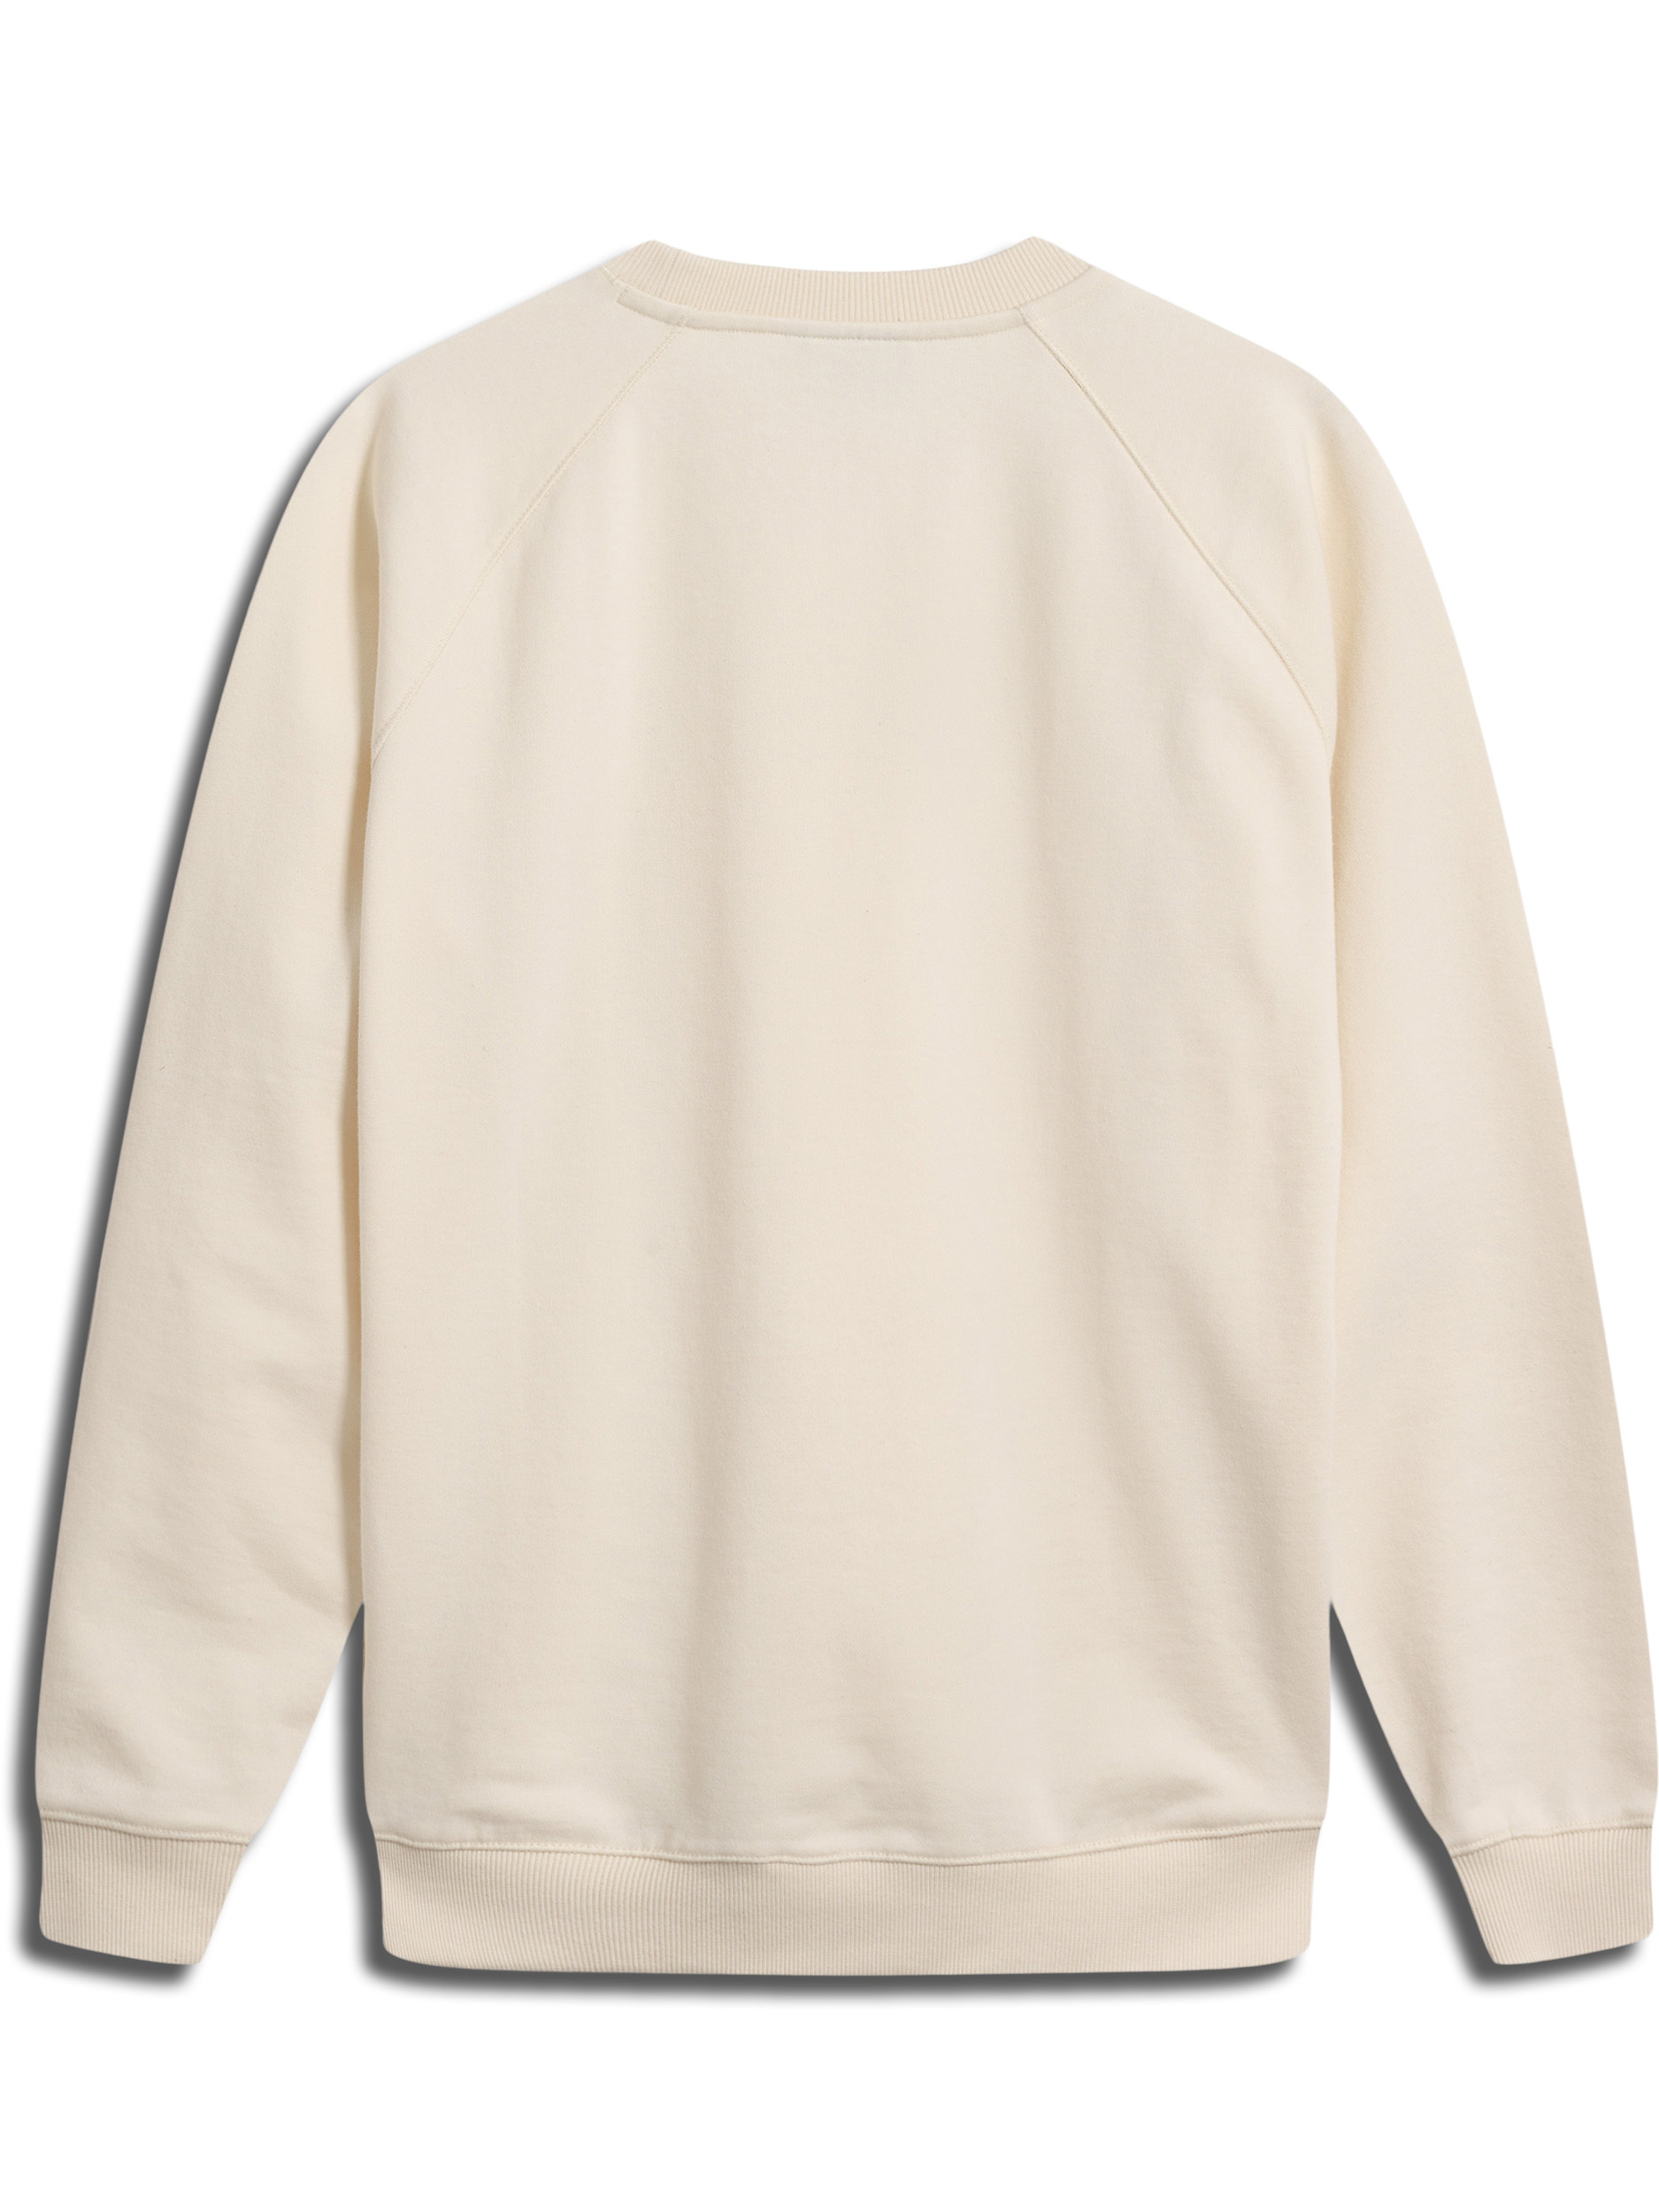 Hummel Sweatshirt HIVE WADE in Weiß 